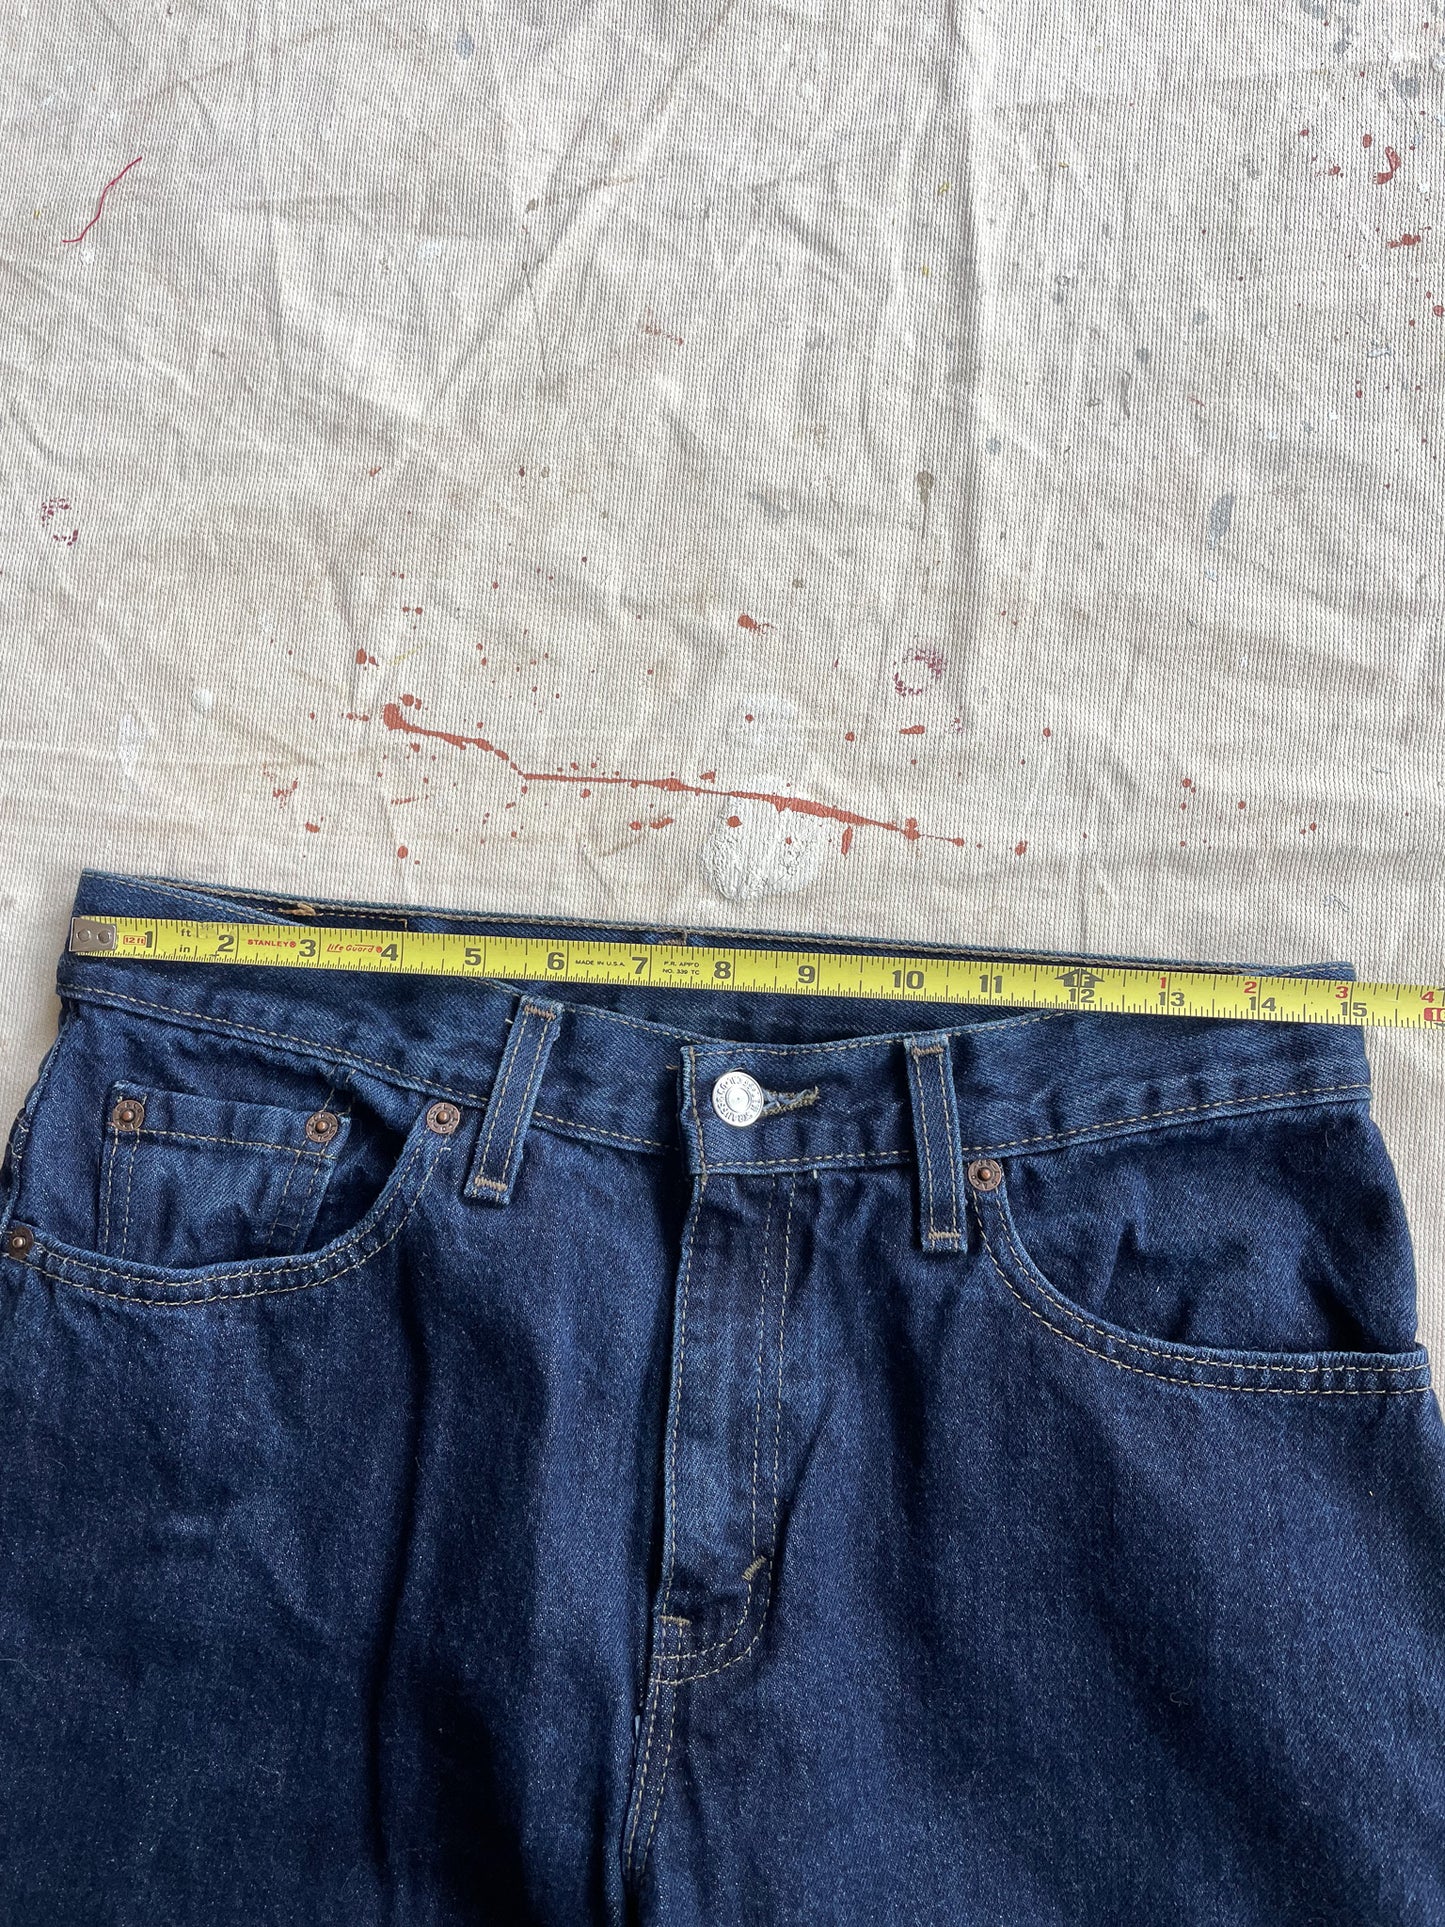 90's Levi's 577 Dark Wash Jeans—[30x33]